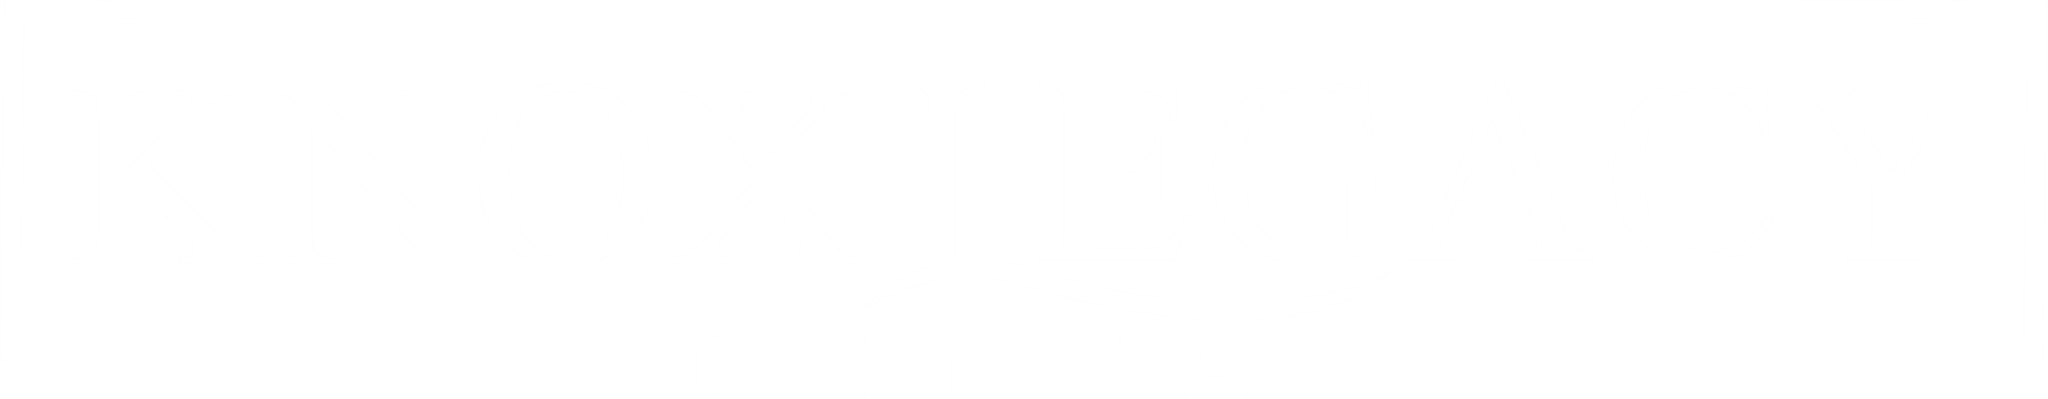 Knox Legacy Dental